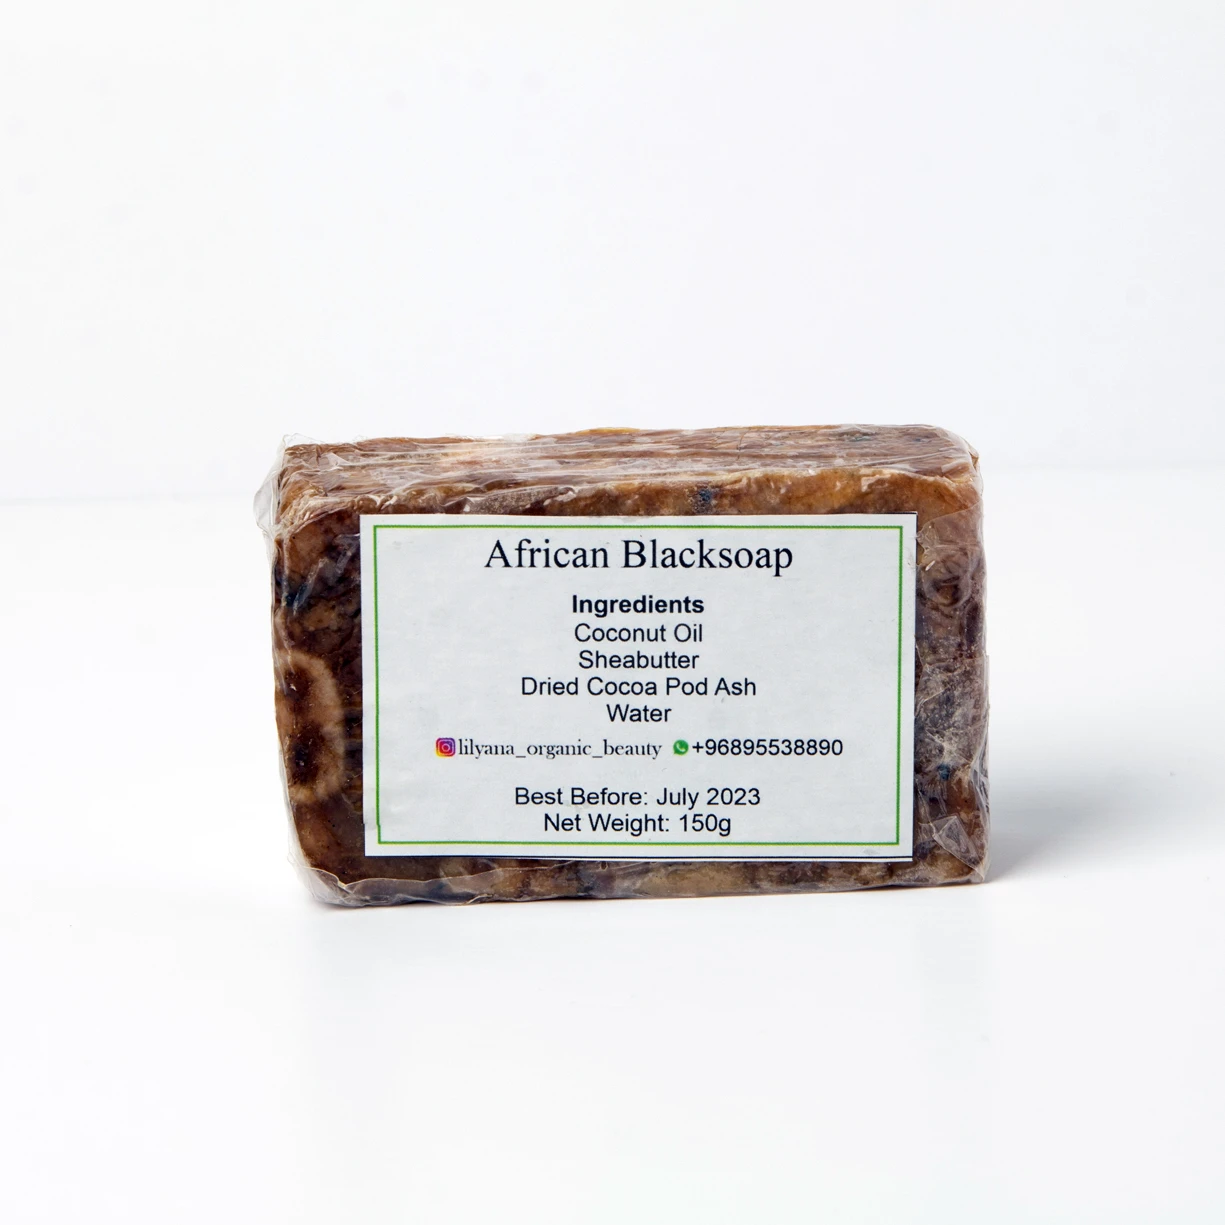 African black soap bar